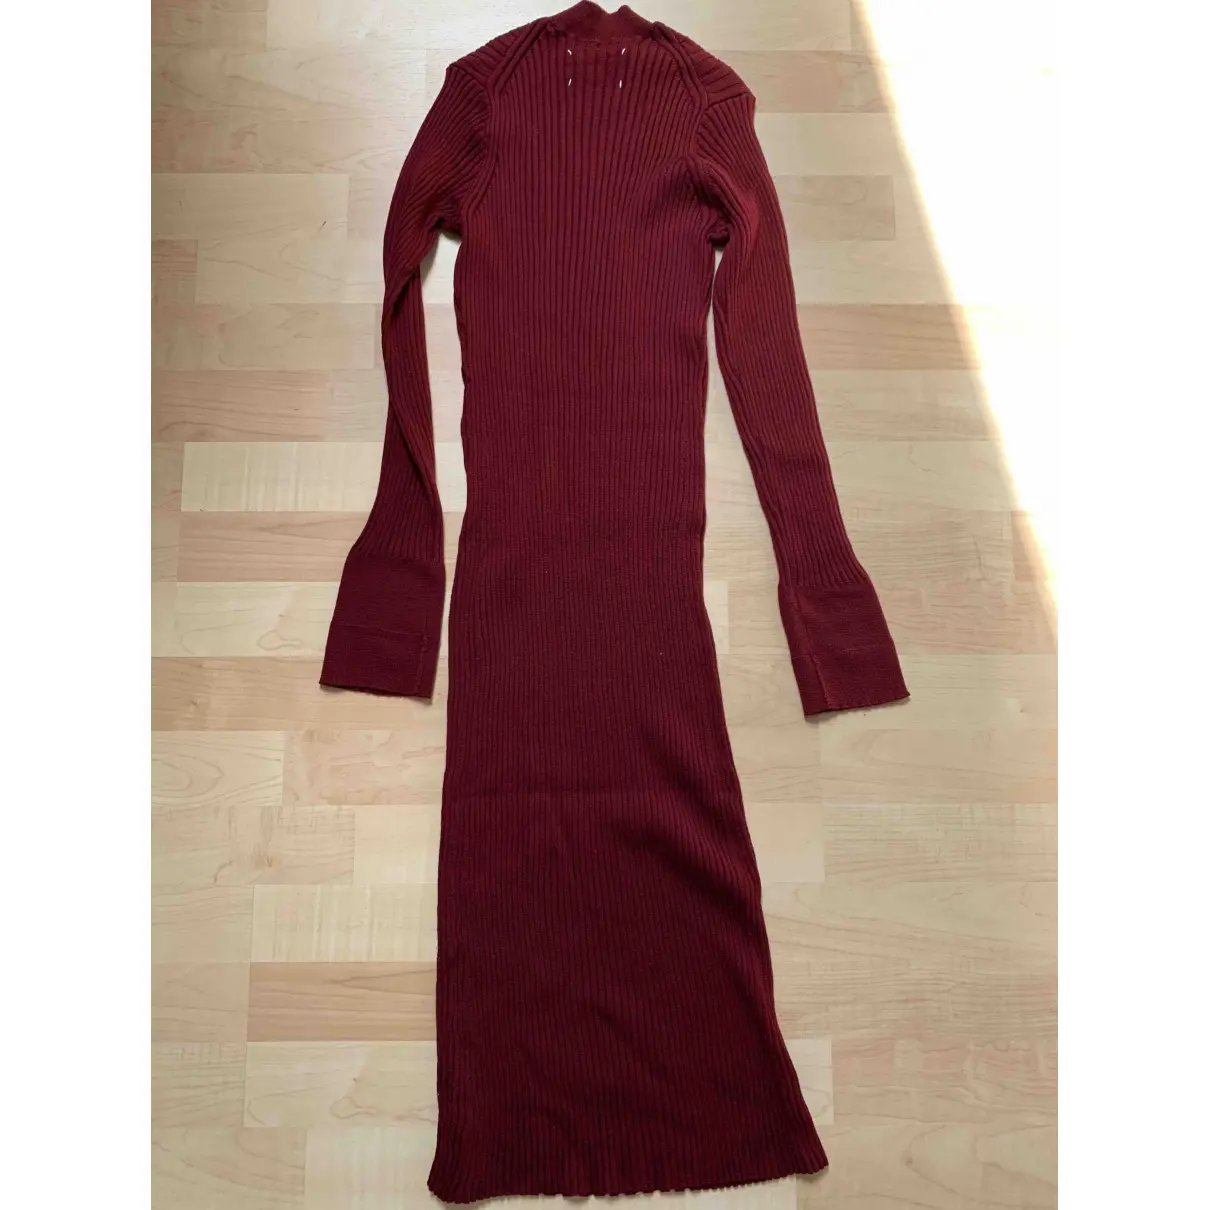 Buy Maison Martin Margiela Wool mid-length dress online